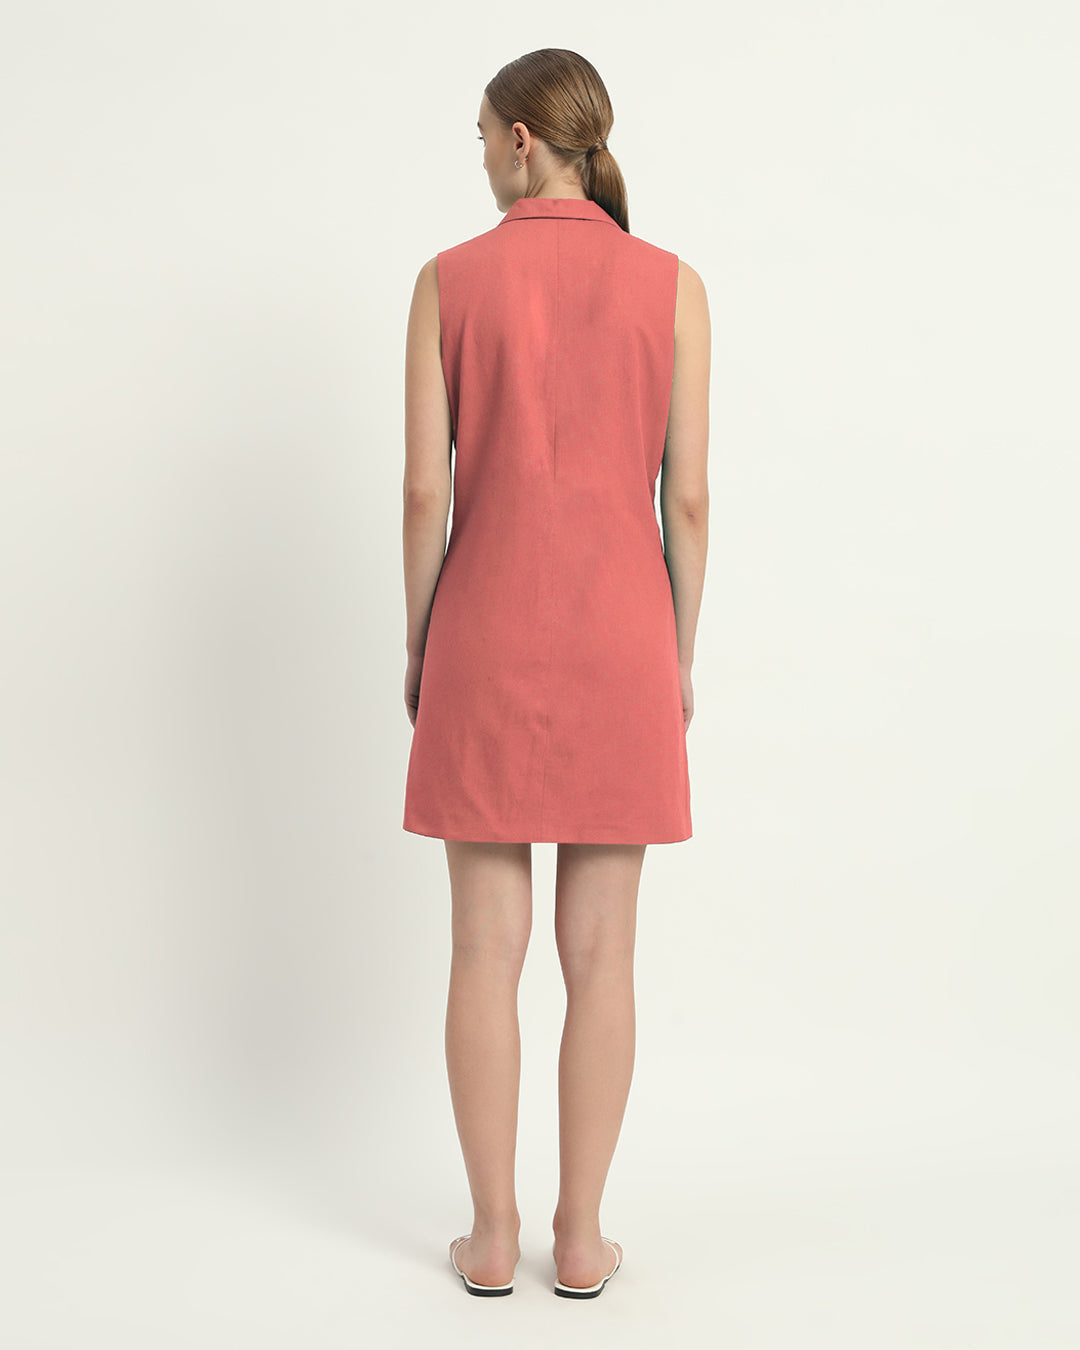 The Vernon  Ivory Pink Cotton Dress